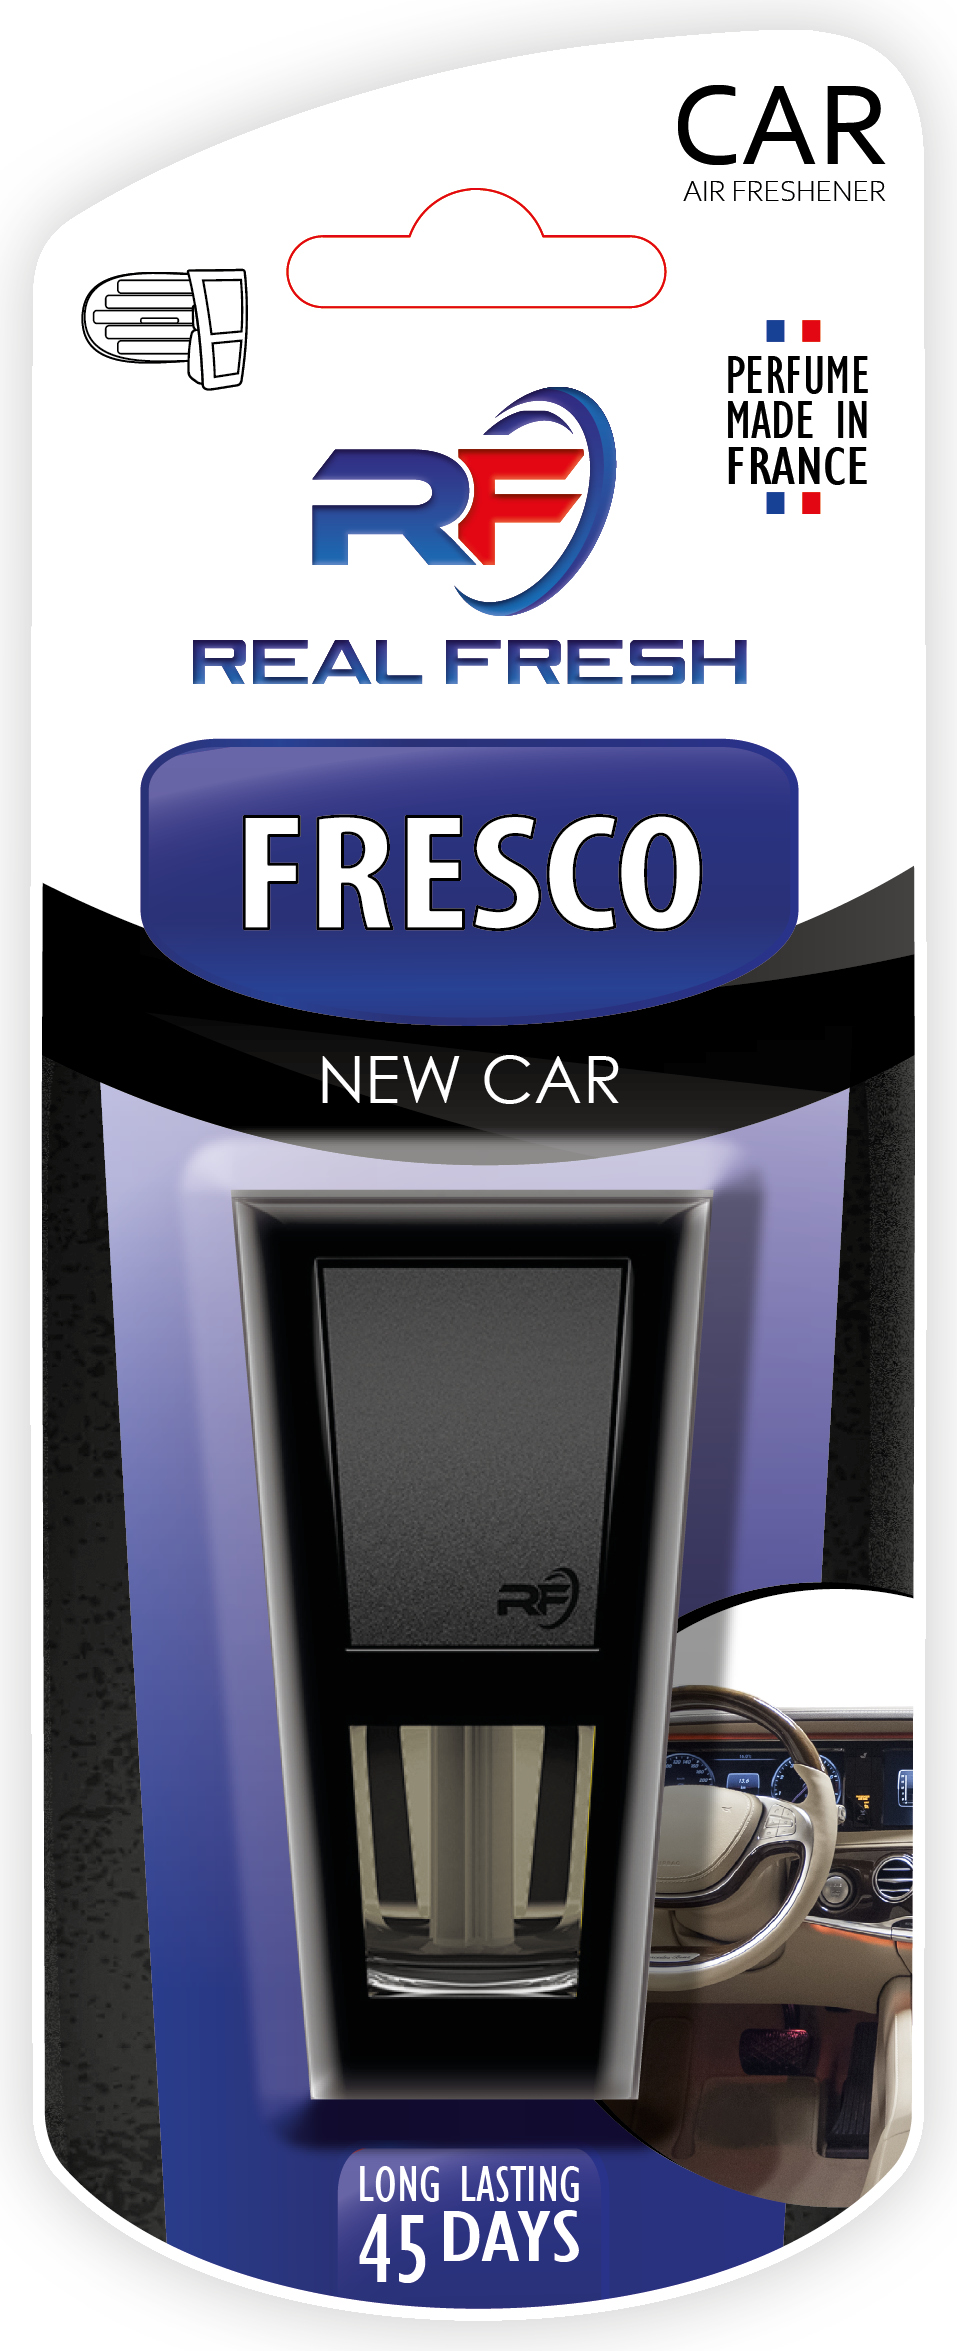 Fresco New Car Image